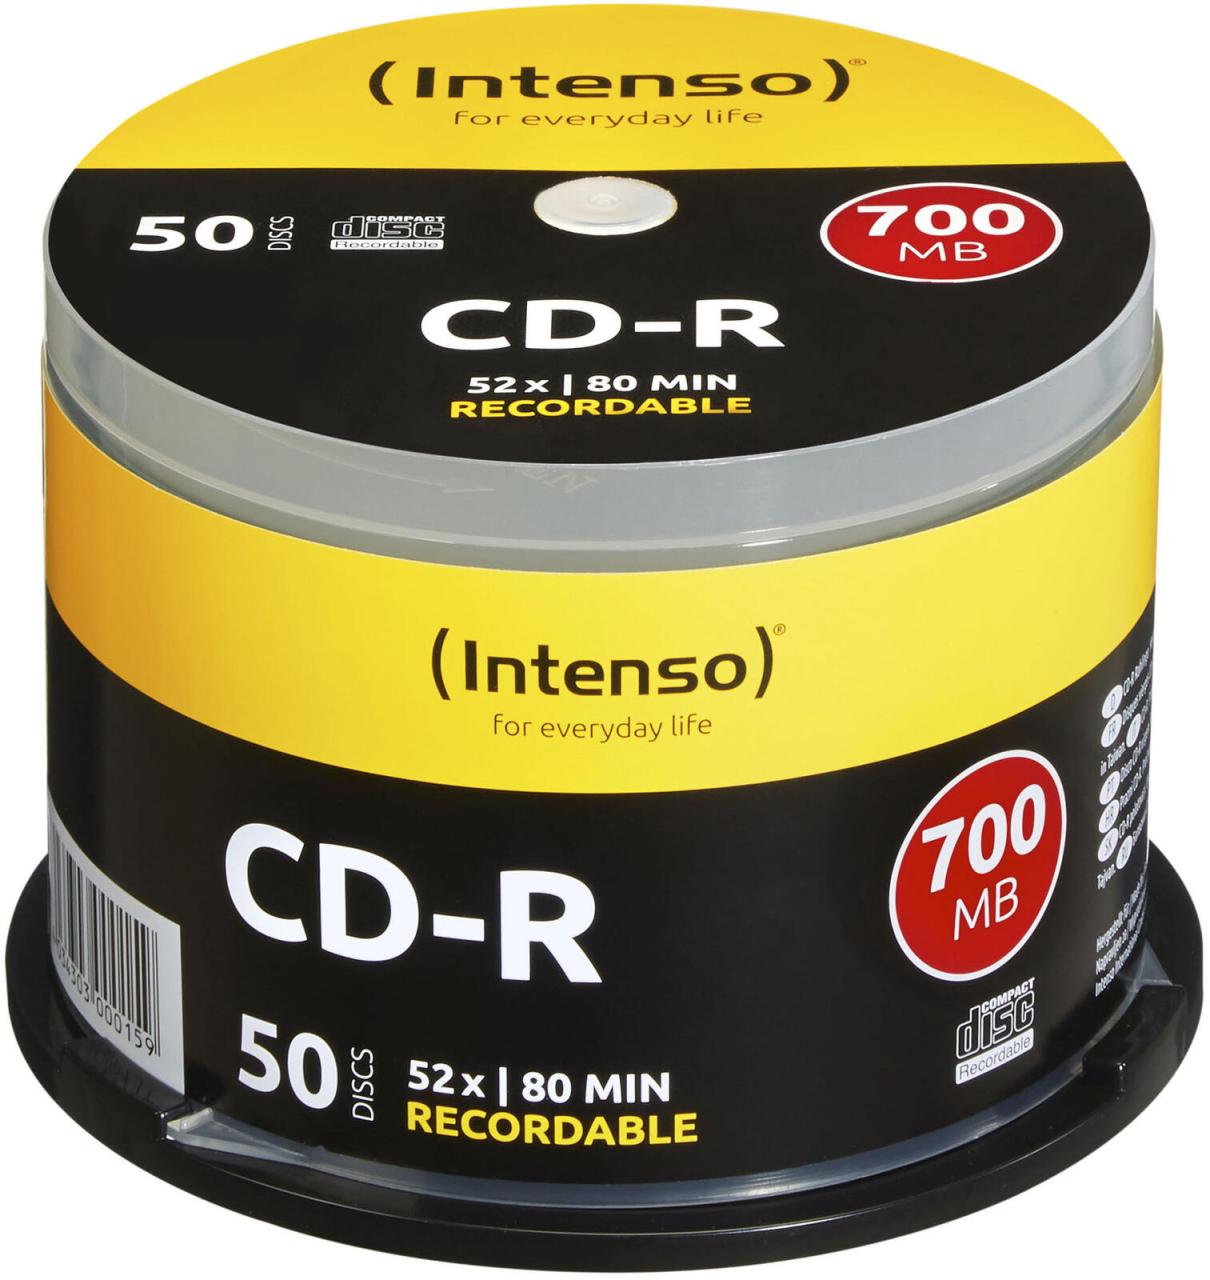 Intenso CD-R 700MB 52x 50er P. Spindel von Intenso